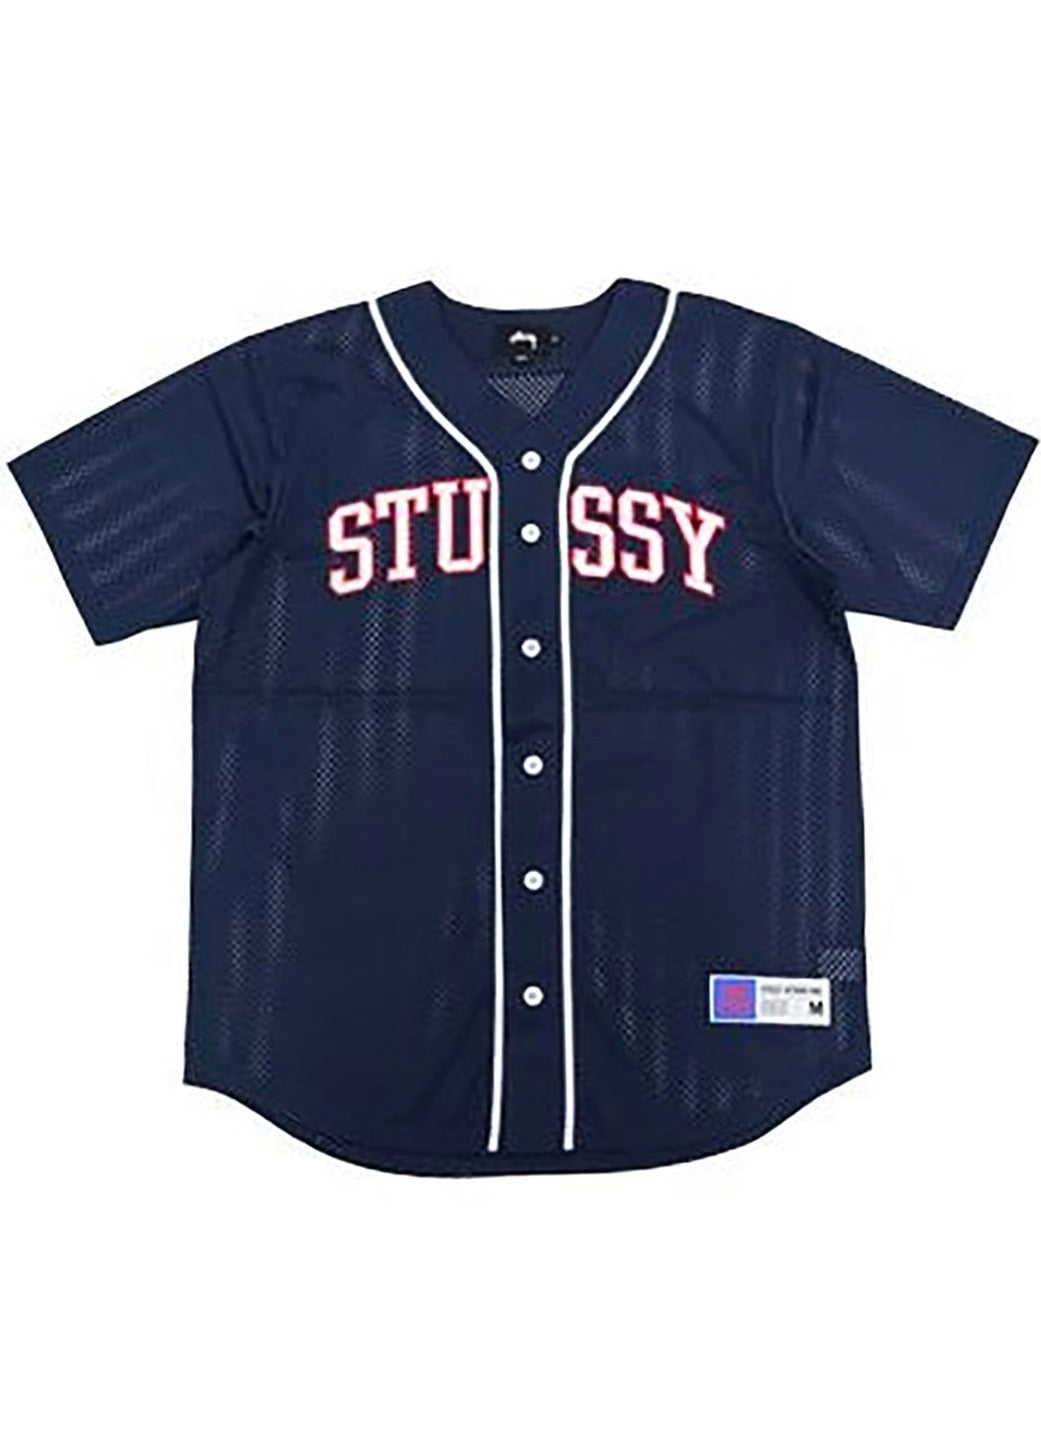 Stussy Rare Navy Baseball Jersey